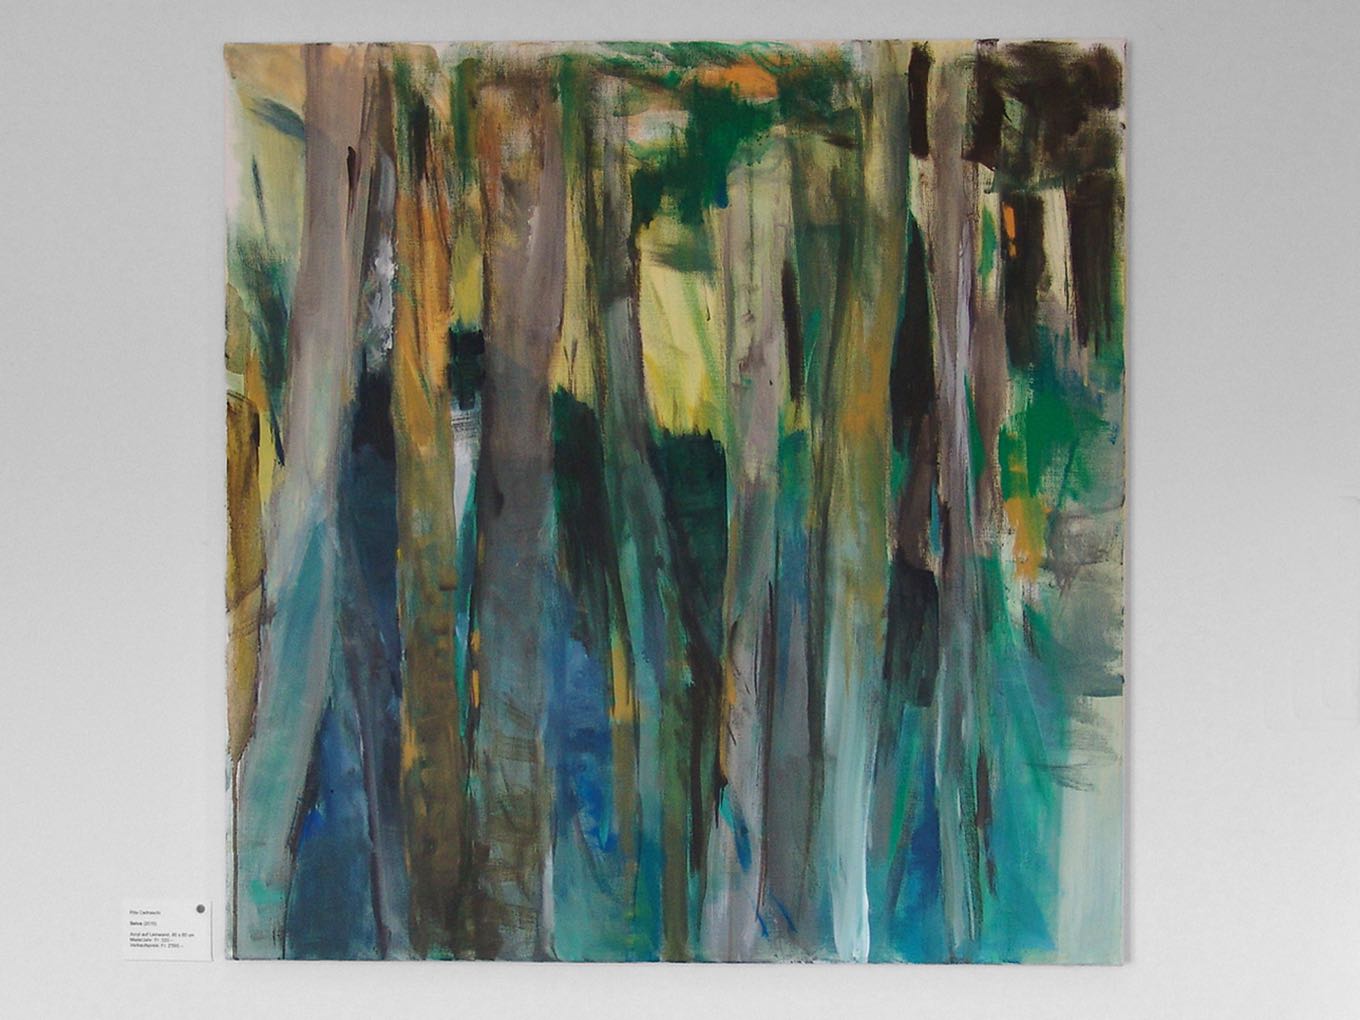 Rita Cedraschi: Selva, 2010, Acryl auf Leinwand, 80 x 80cm